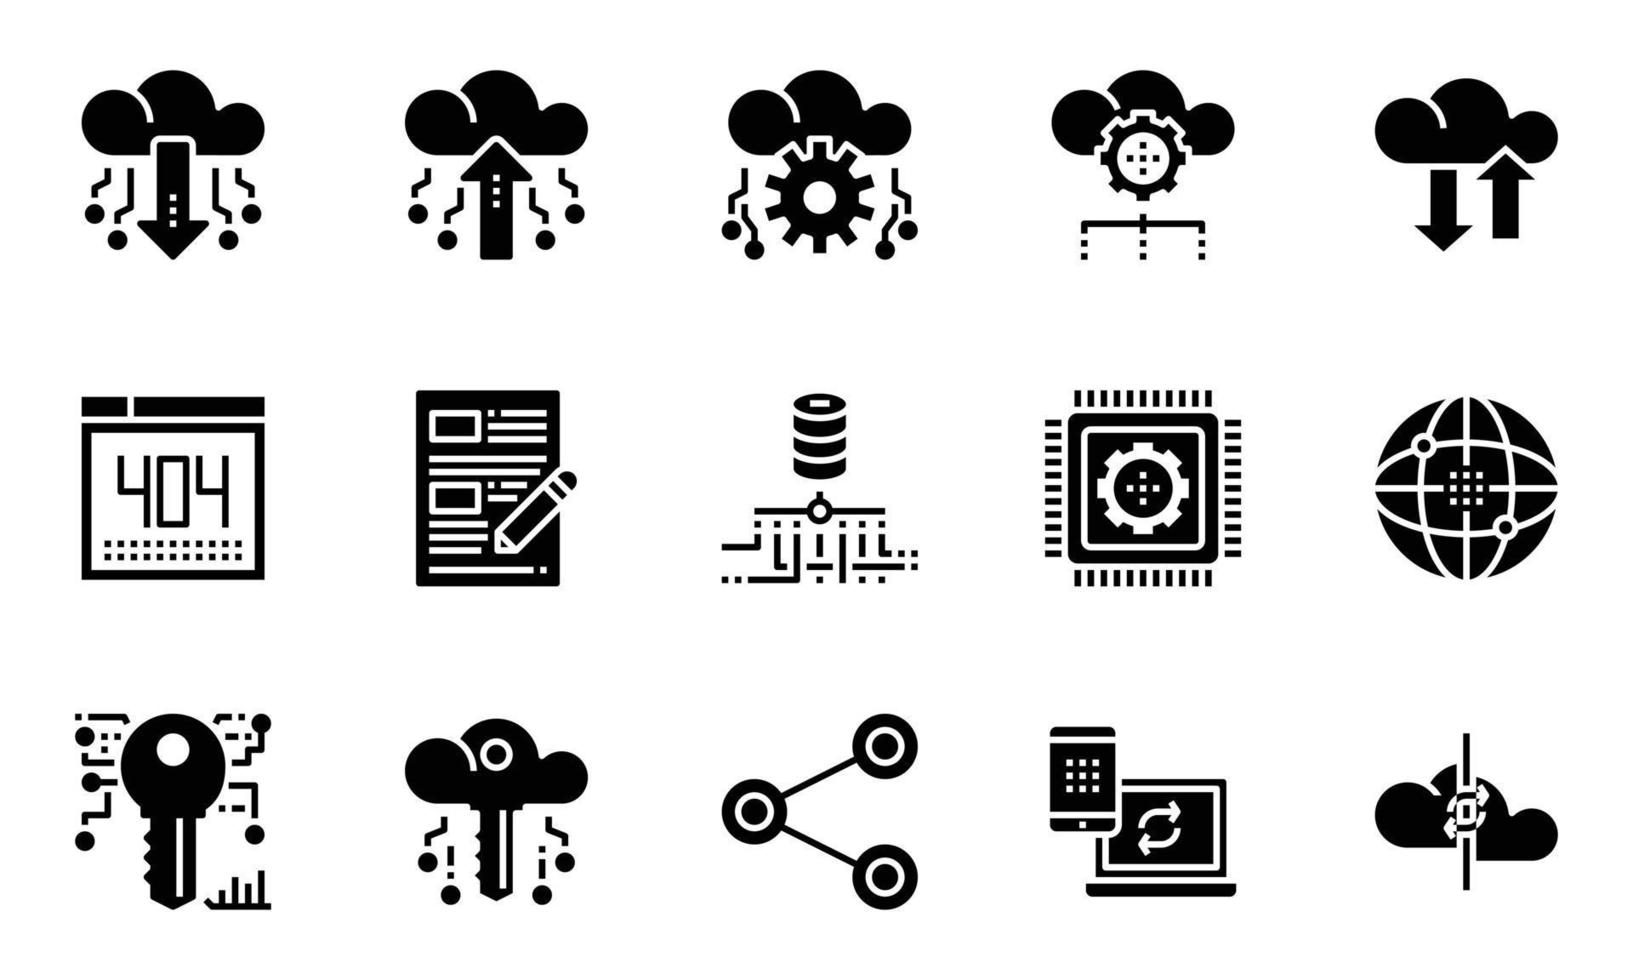 Cloud Data Technology Services Icons Vektor, Netzwerk, Analyse, Informationen, vektor